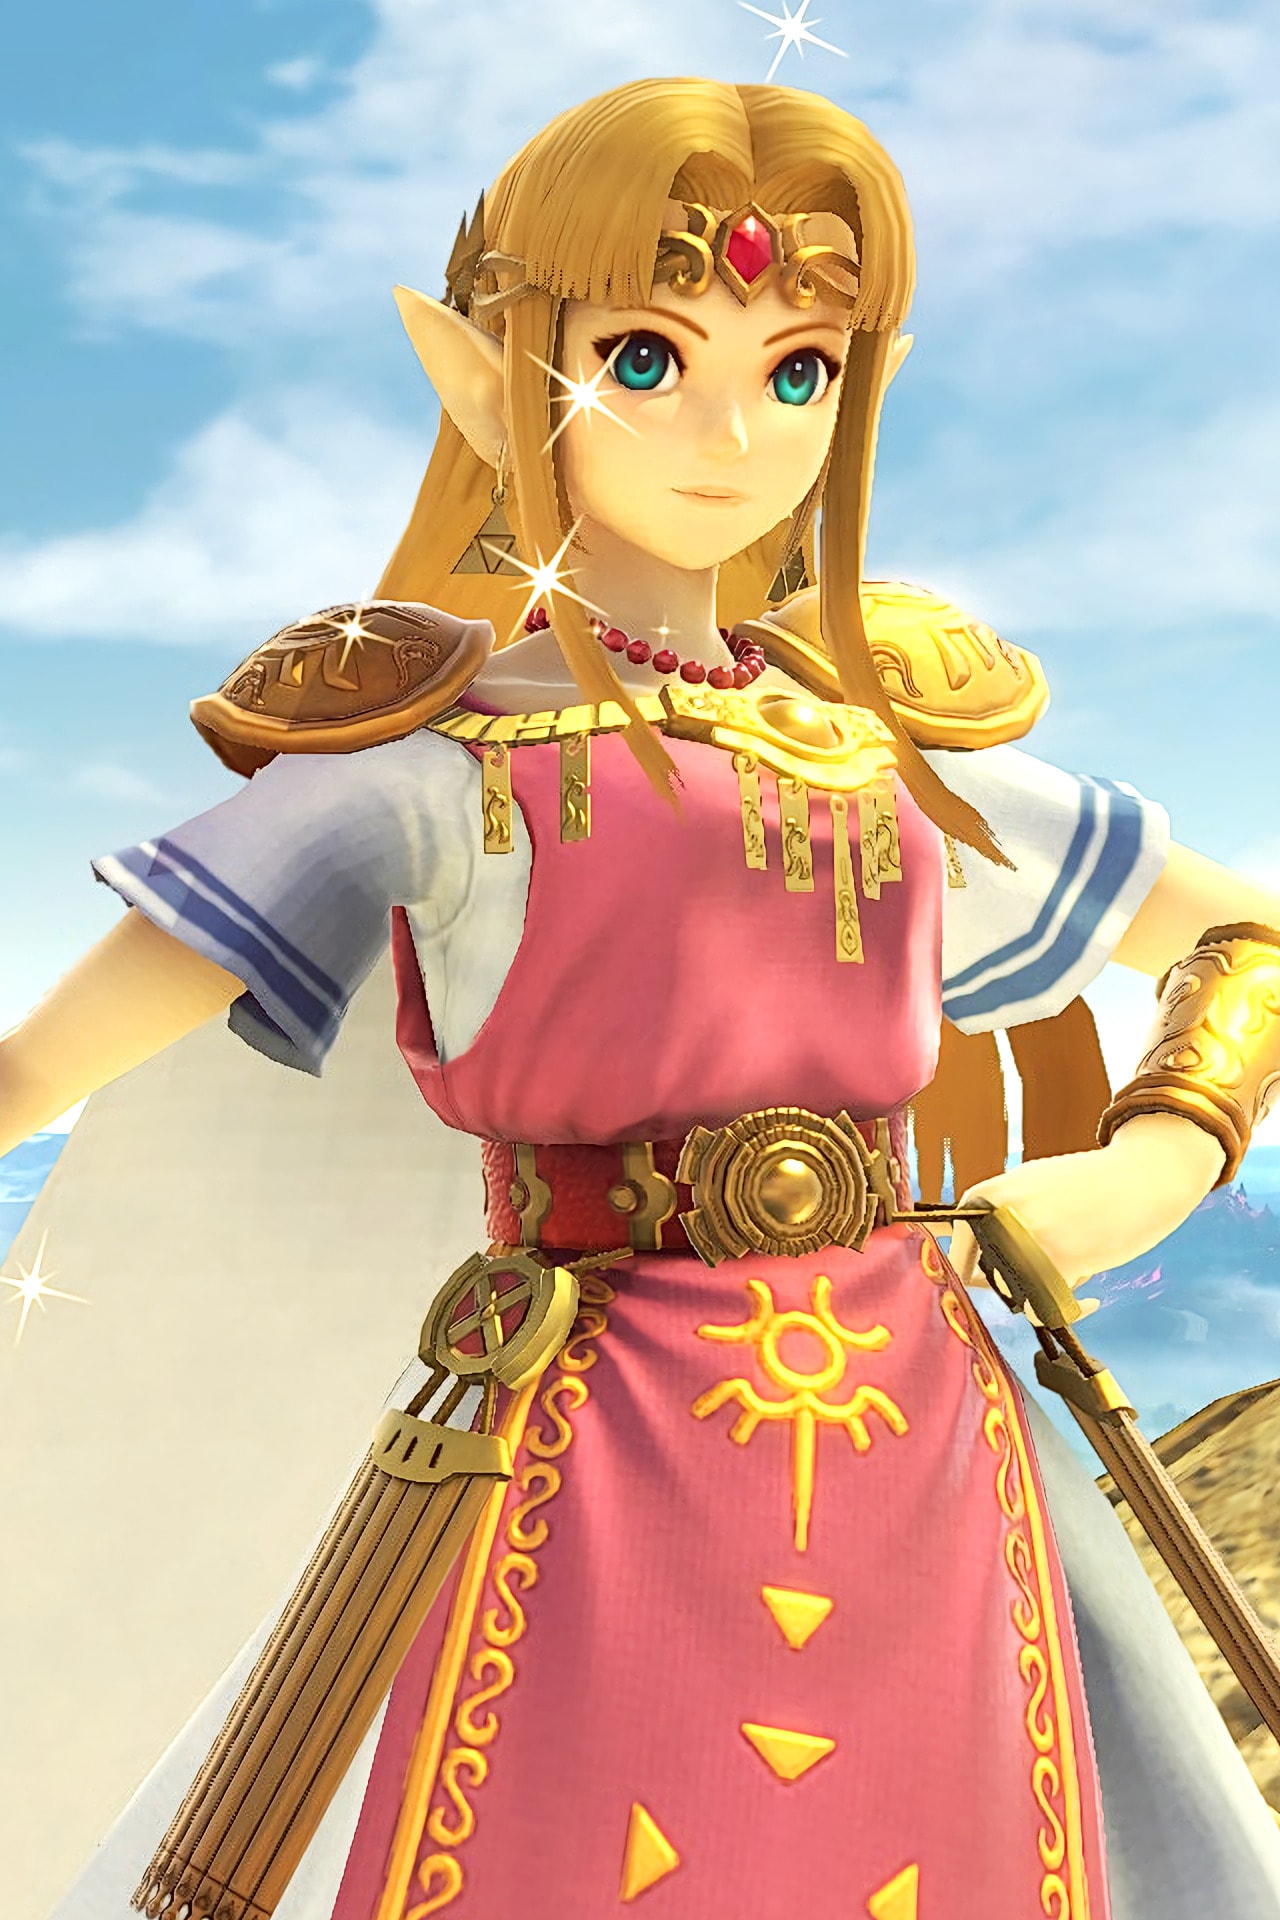 Download Cute Princess Zelda Wallpaper - KoLPaPer - Awesome Free HD ...